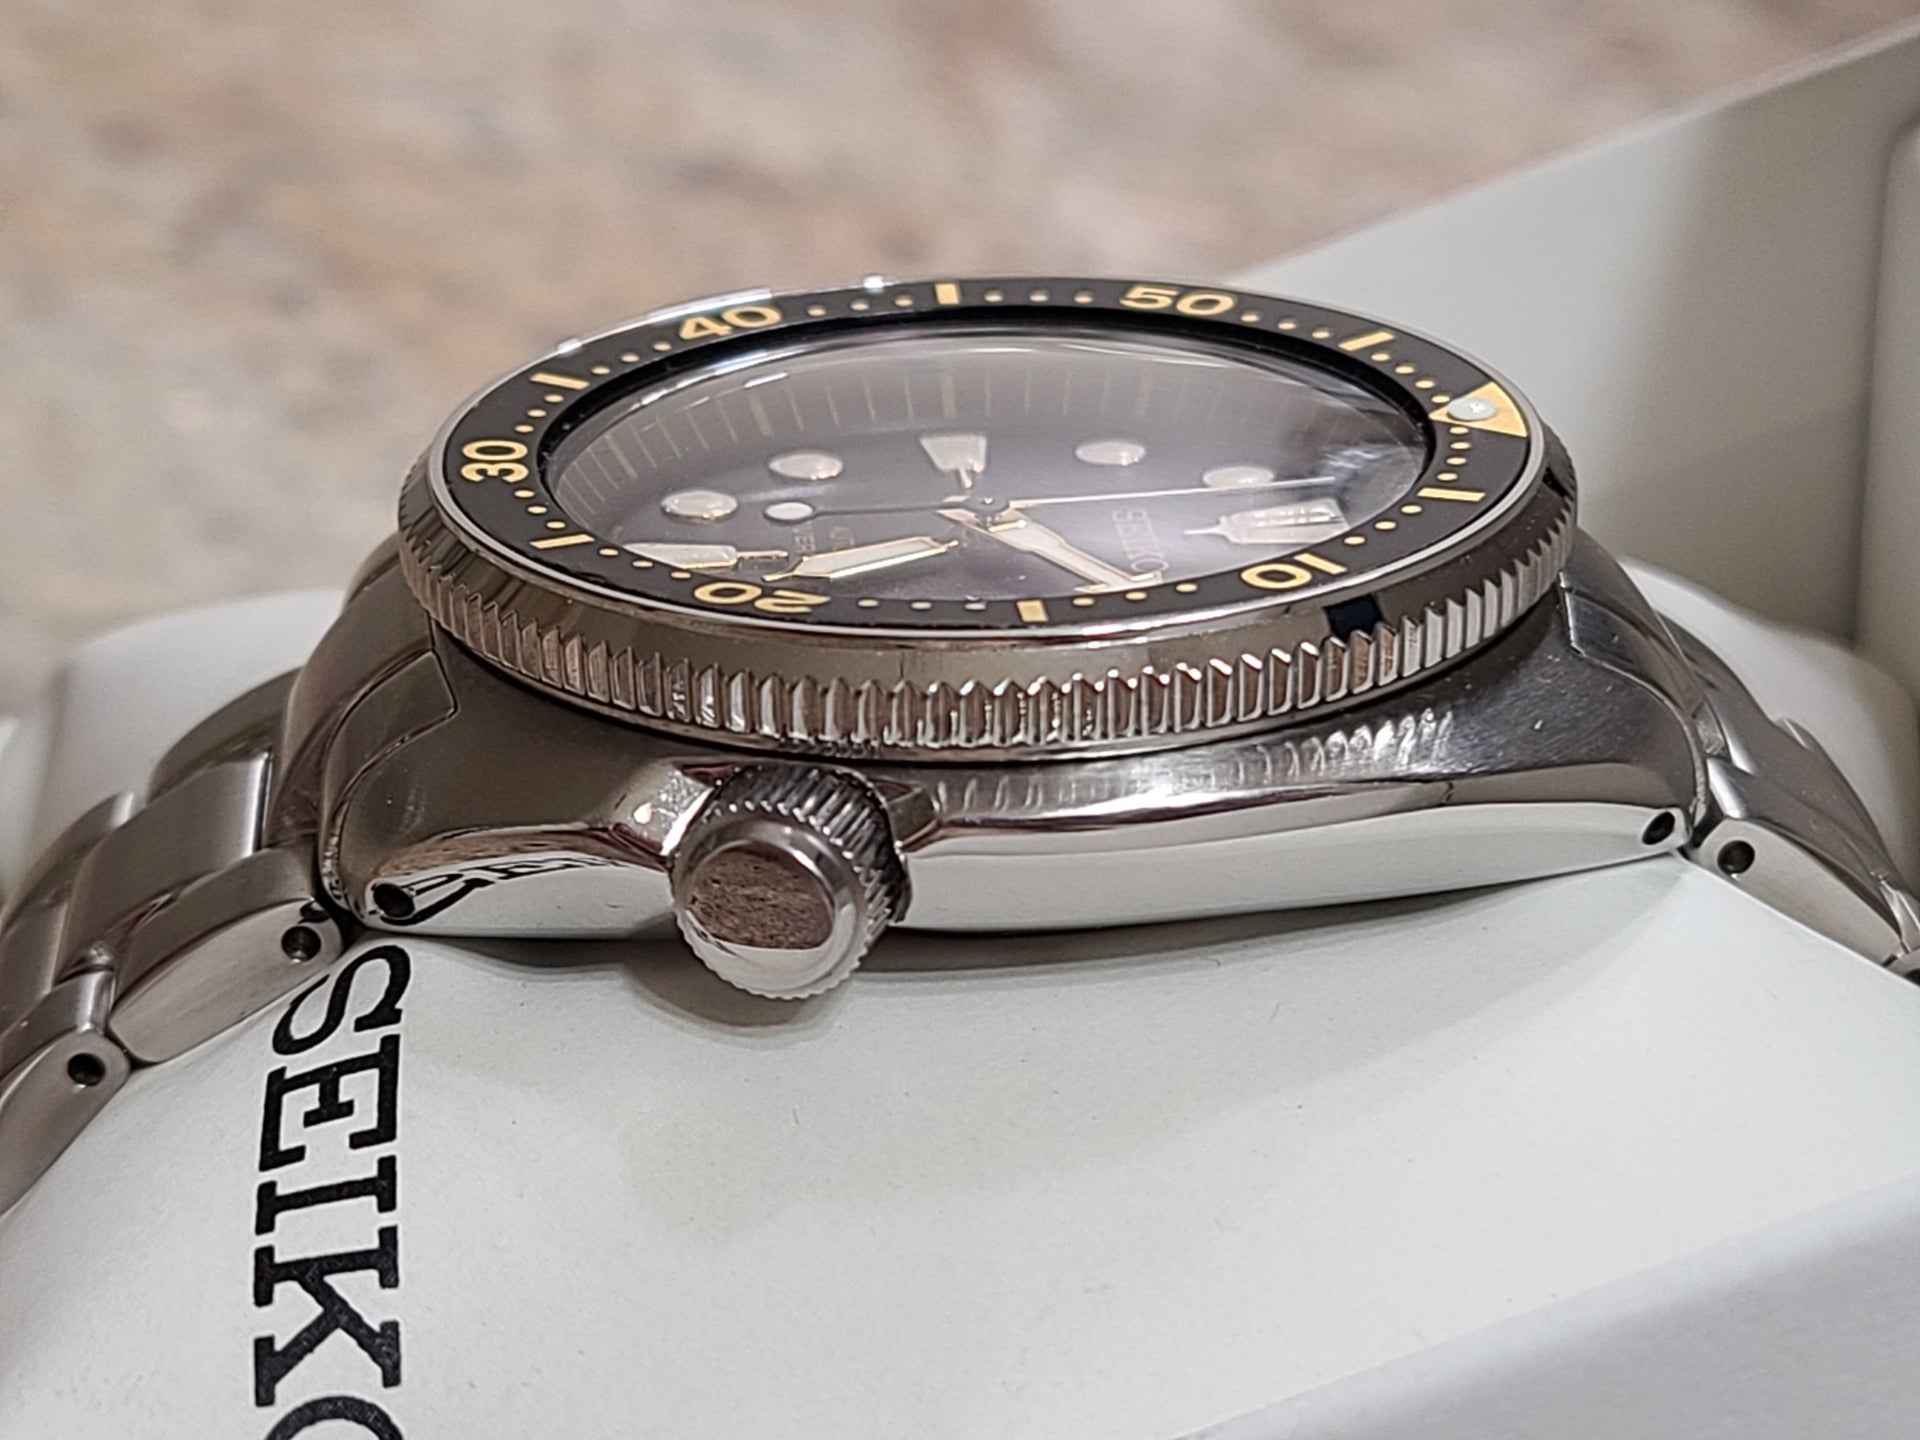 Sold] FS: Seiko SRP775 Turtle gilt dial, domed AR sapphire + coin-edge bezel!  | WatchUSeek Watch Forums